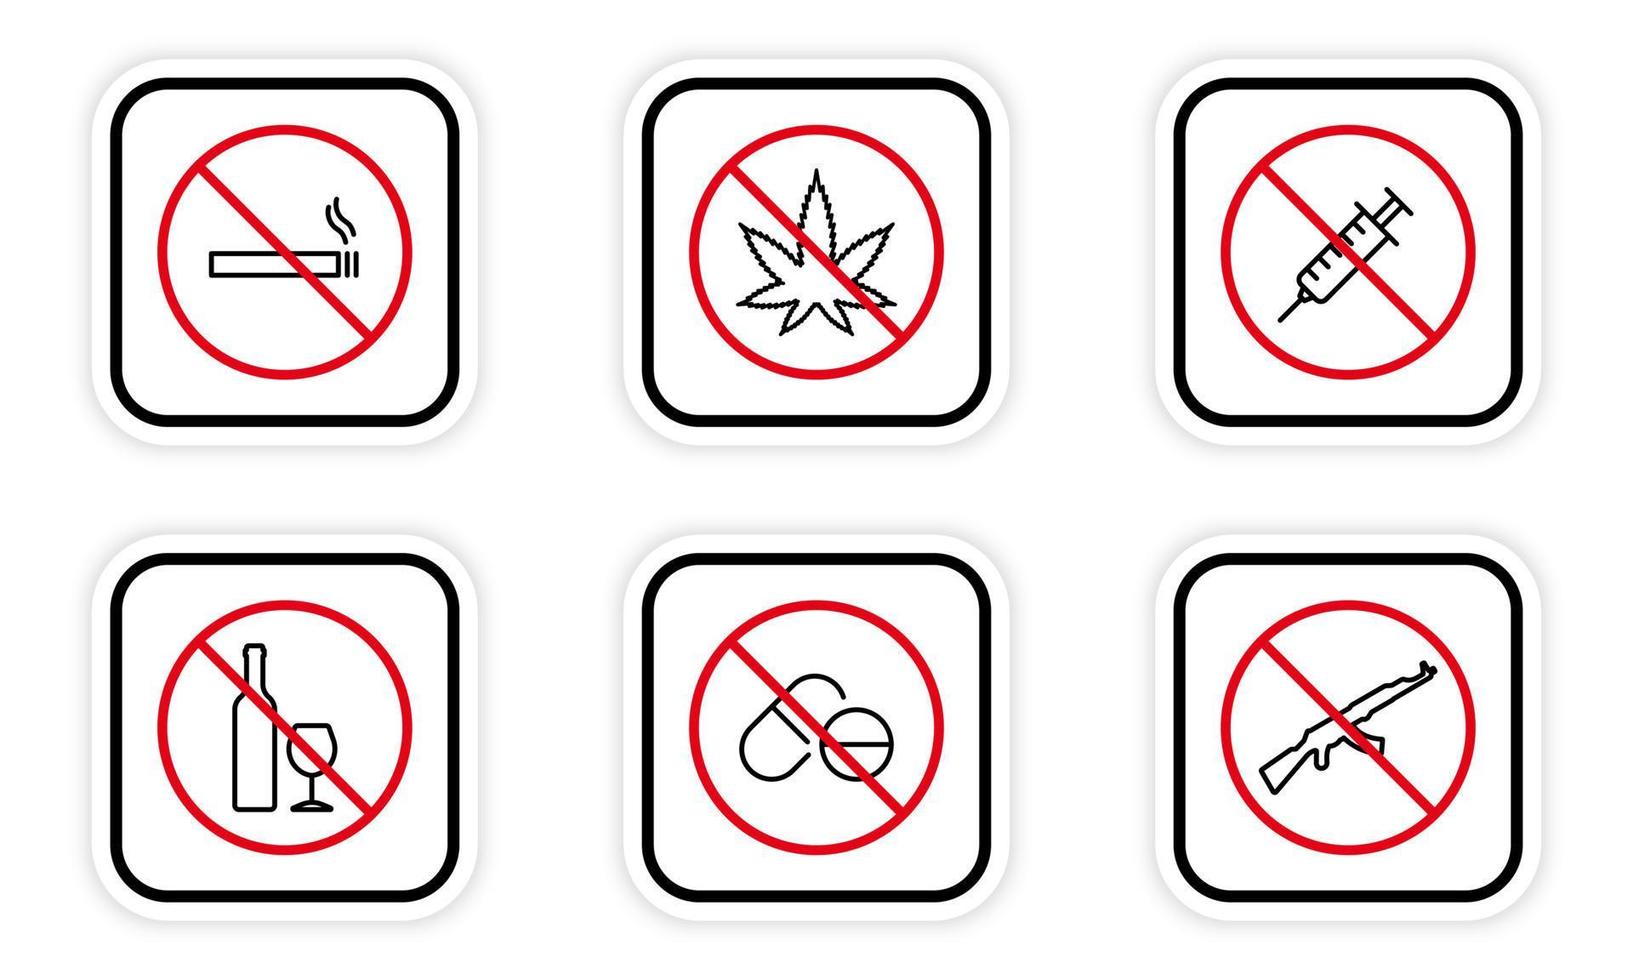 No Drug, Alcohol, Cigarette, Pill, Syringe, Gun AK47 Line Icon Set. Narcotic, Weapon Forbidden Outline Pictogram. Danger Addiction Stop Symbol. Illegal Sign Prohibited. Isolated Vector Illustration.